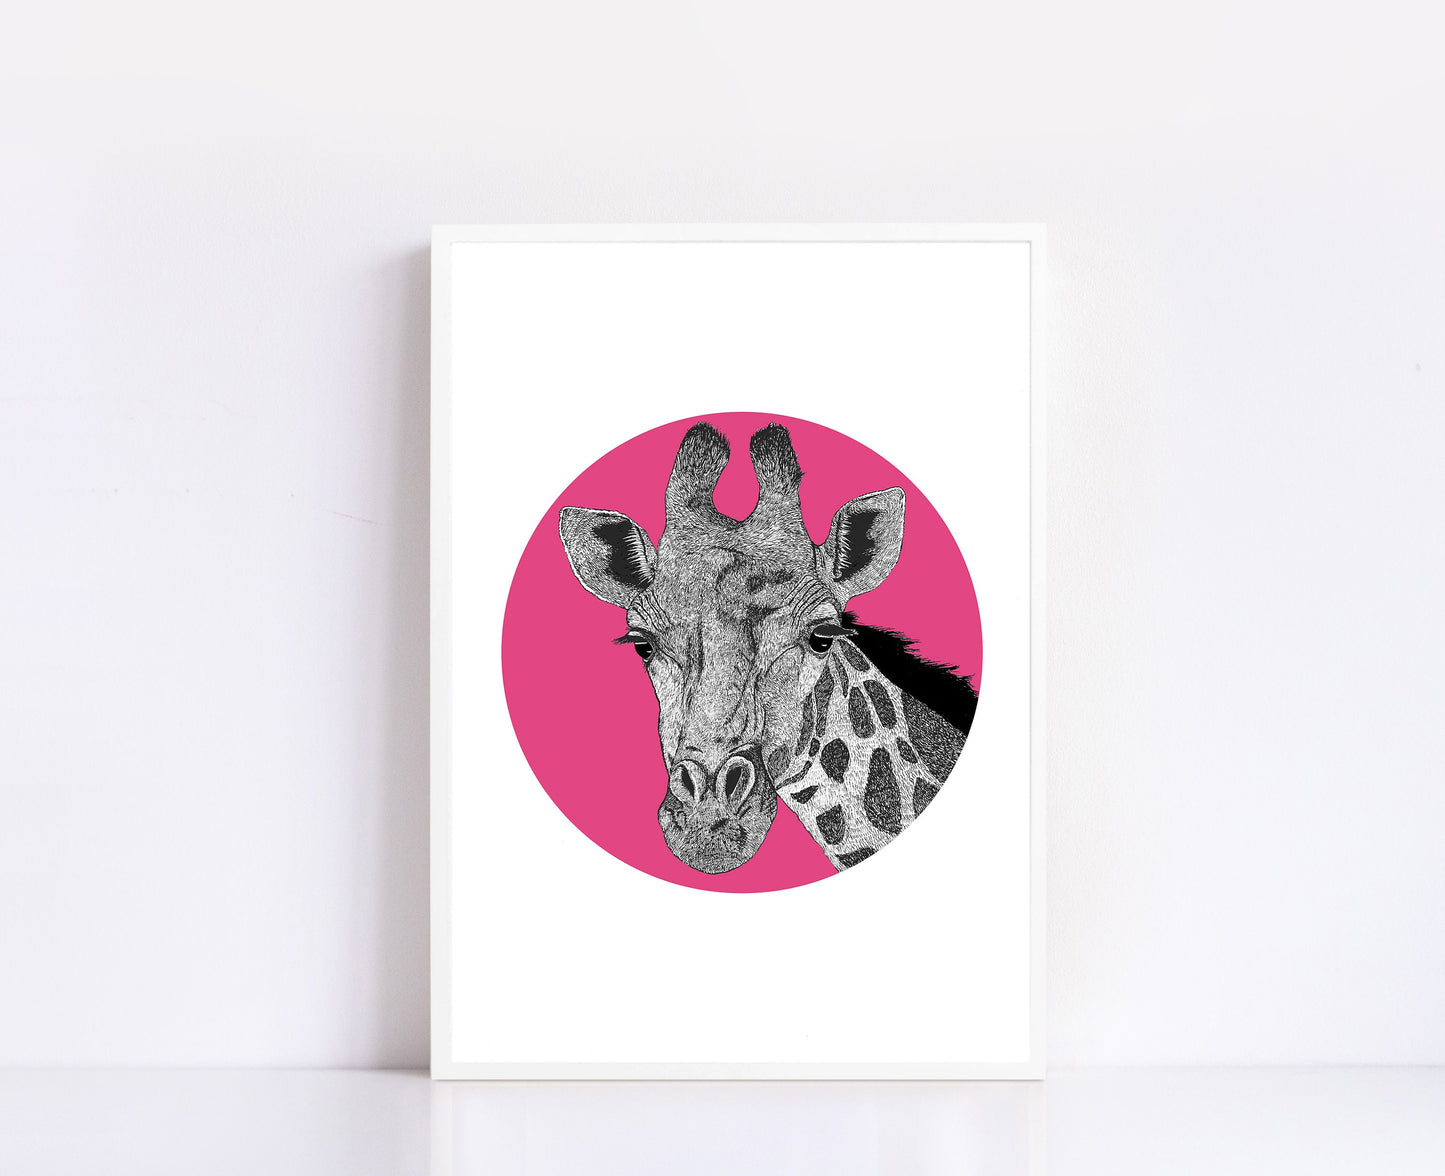 Giraffe Illustration Print